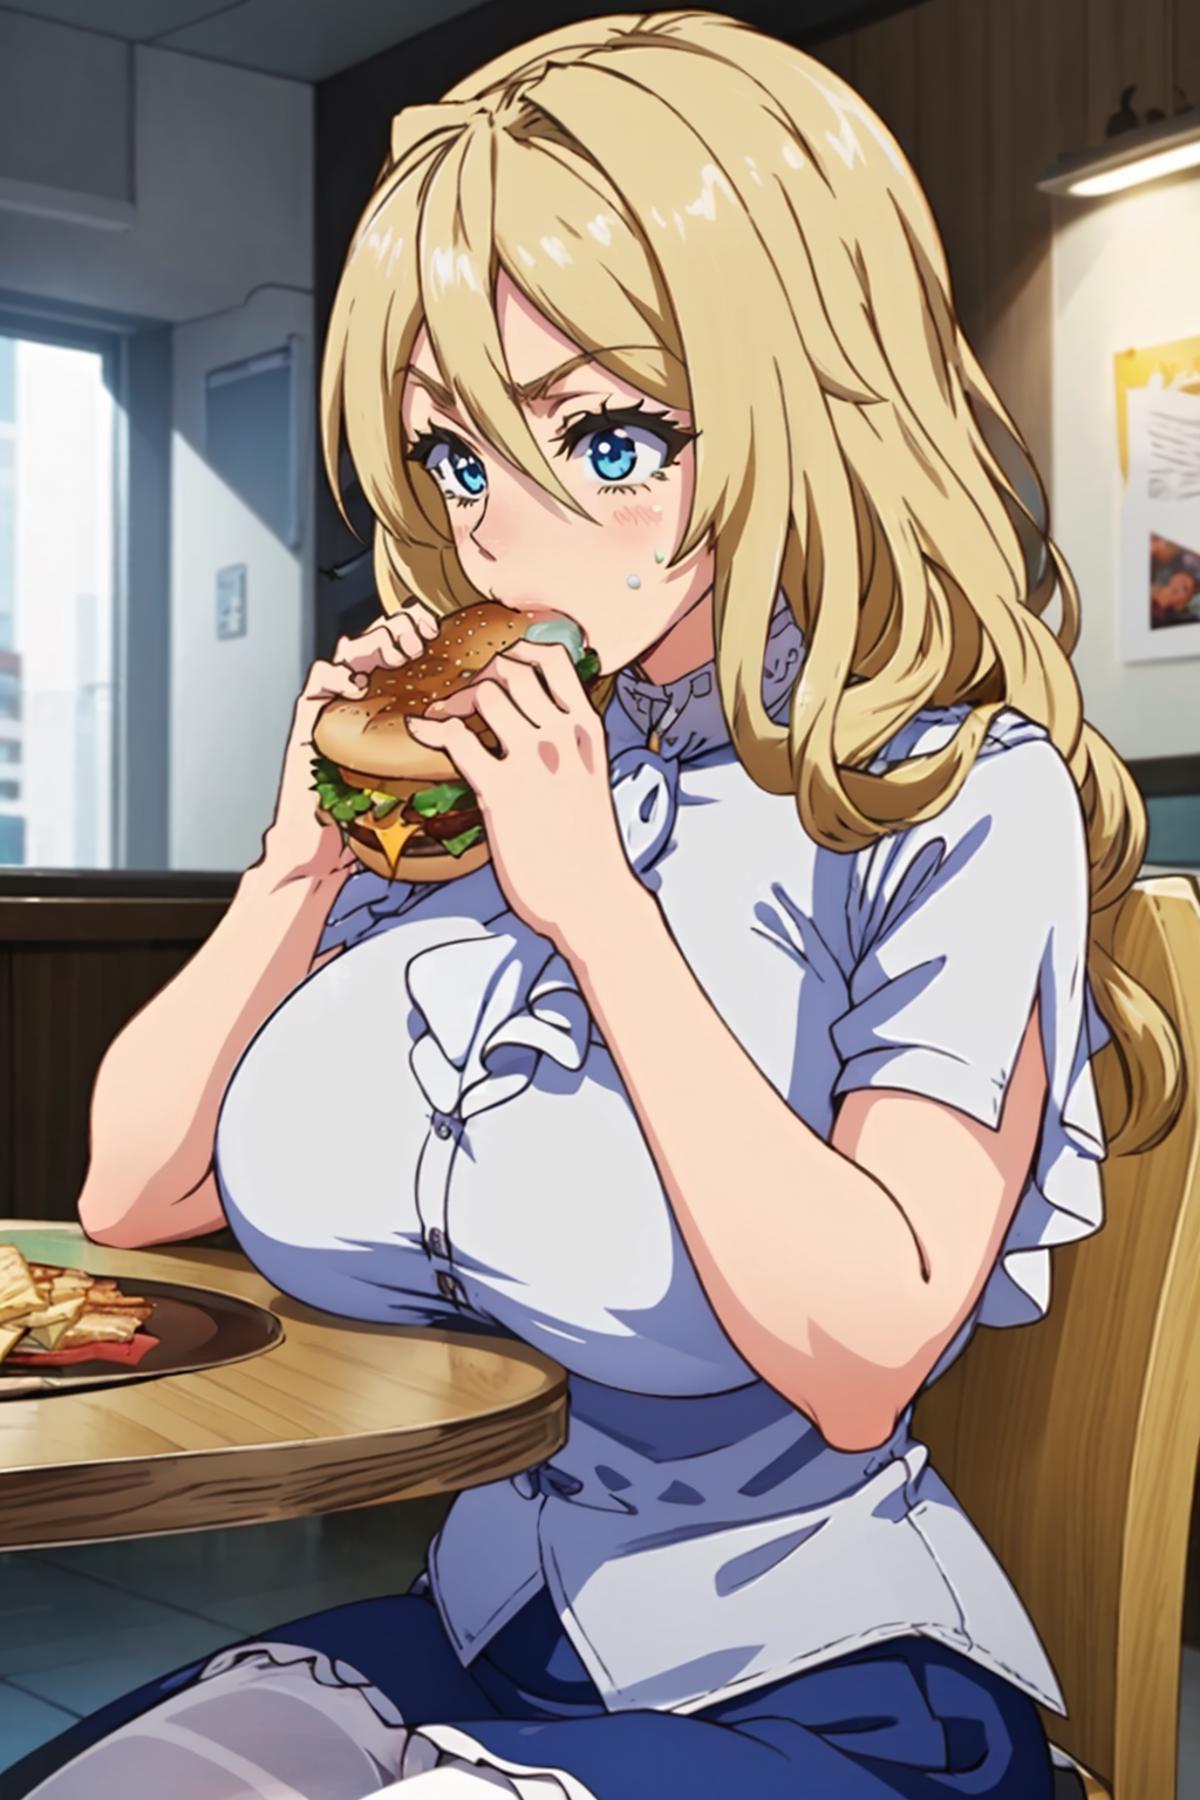 Huge Two-Handed Burger LoRA image by novowels